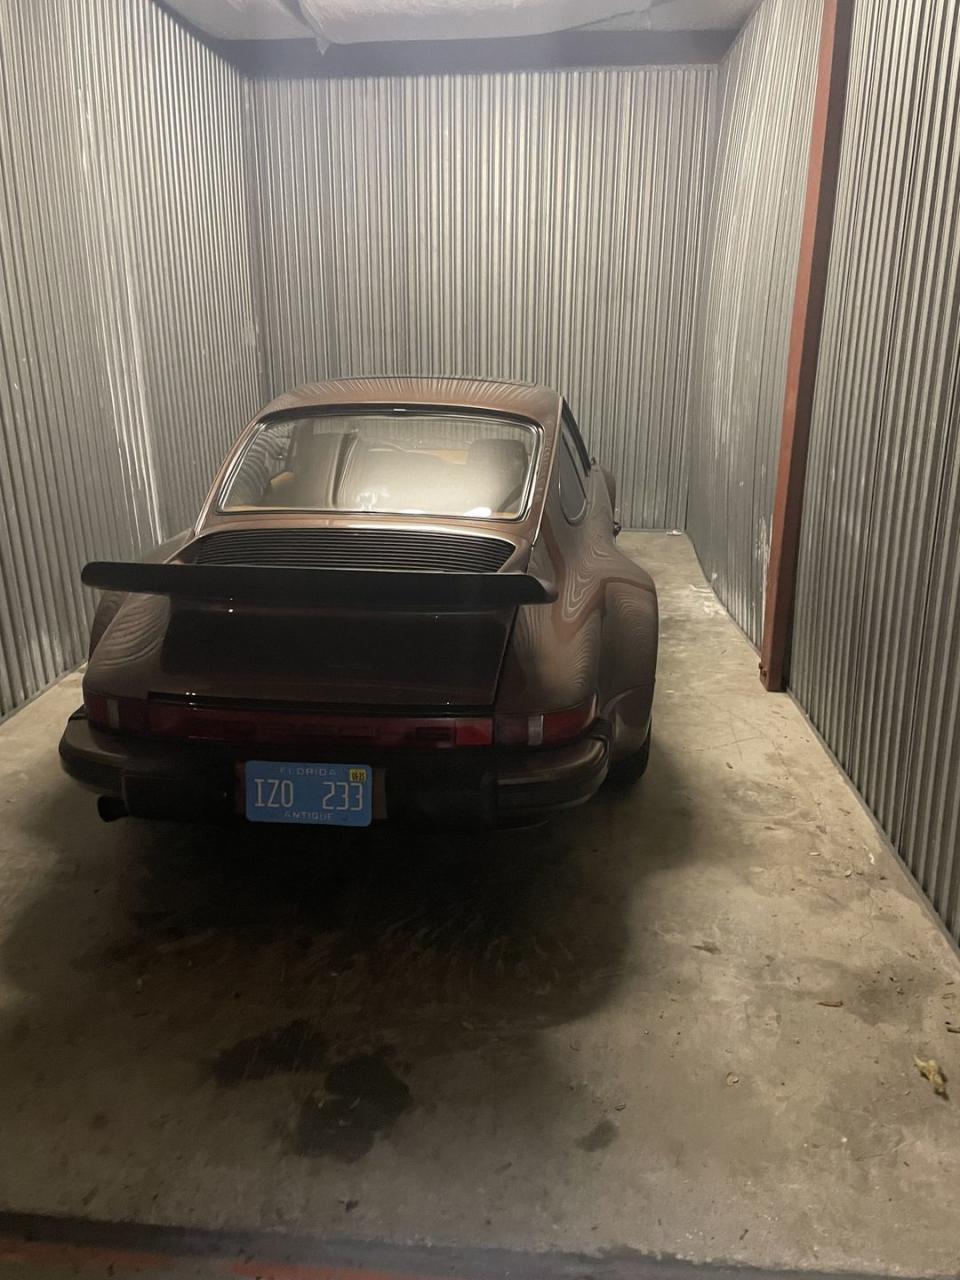 1977 porsche 911 turbo stolen from the sarasota classic car museum in storage locker